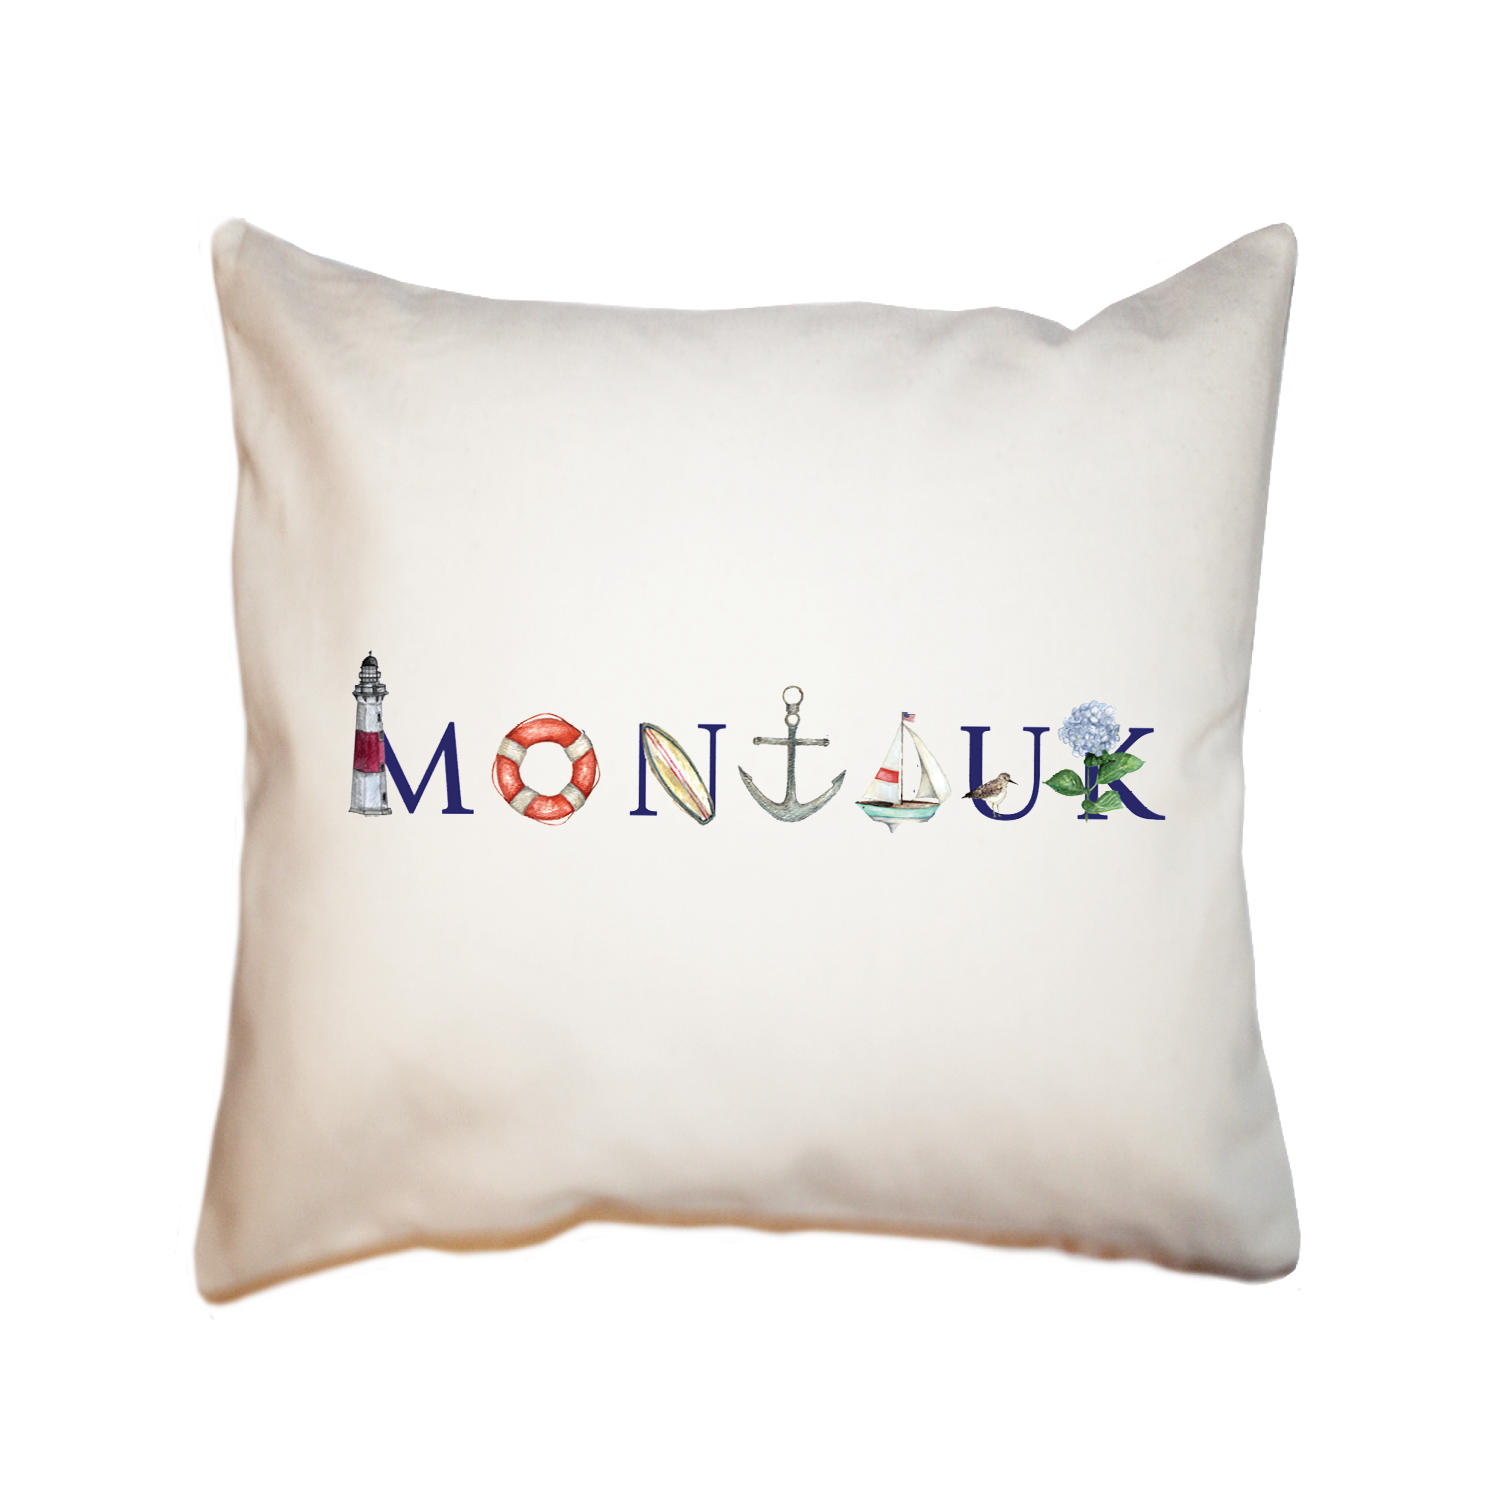 montauk square pillow